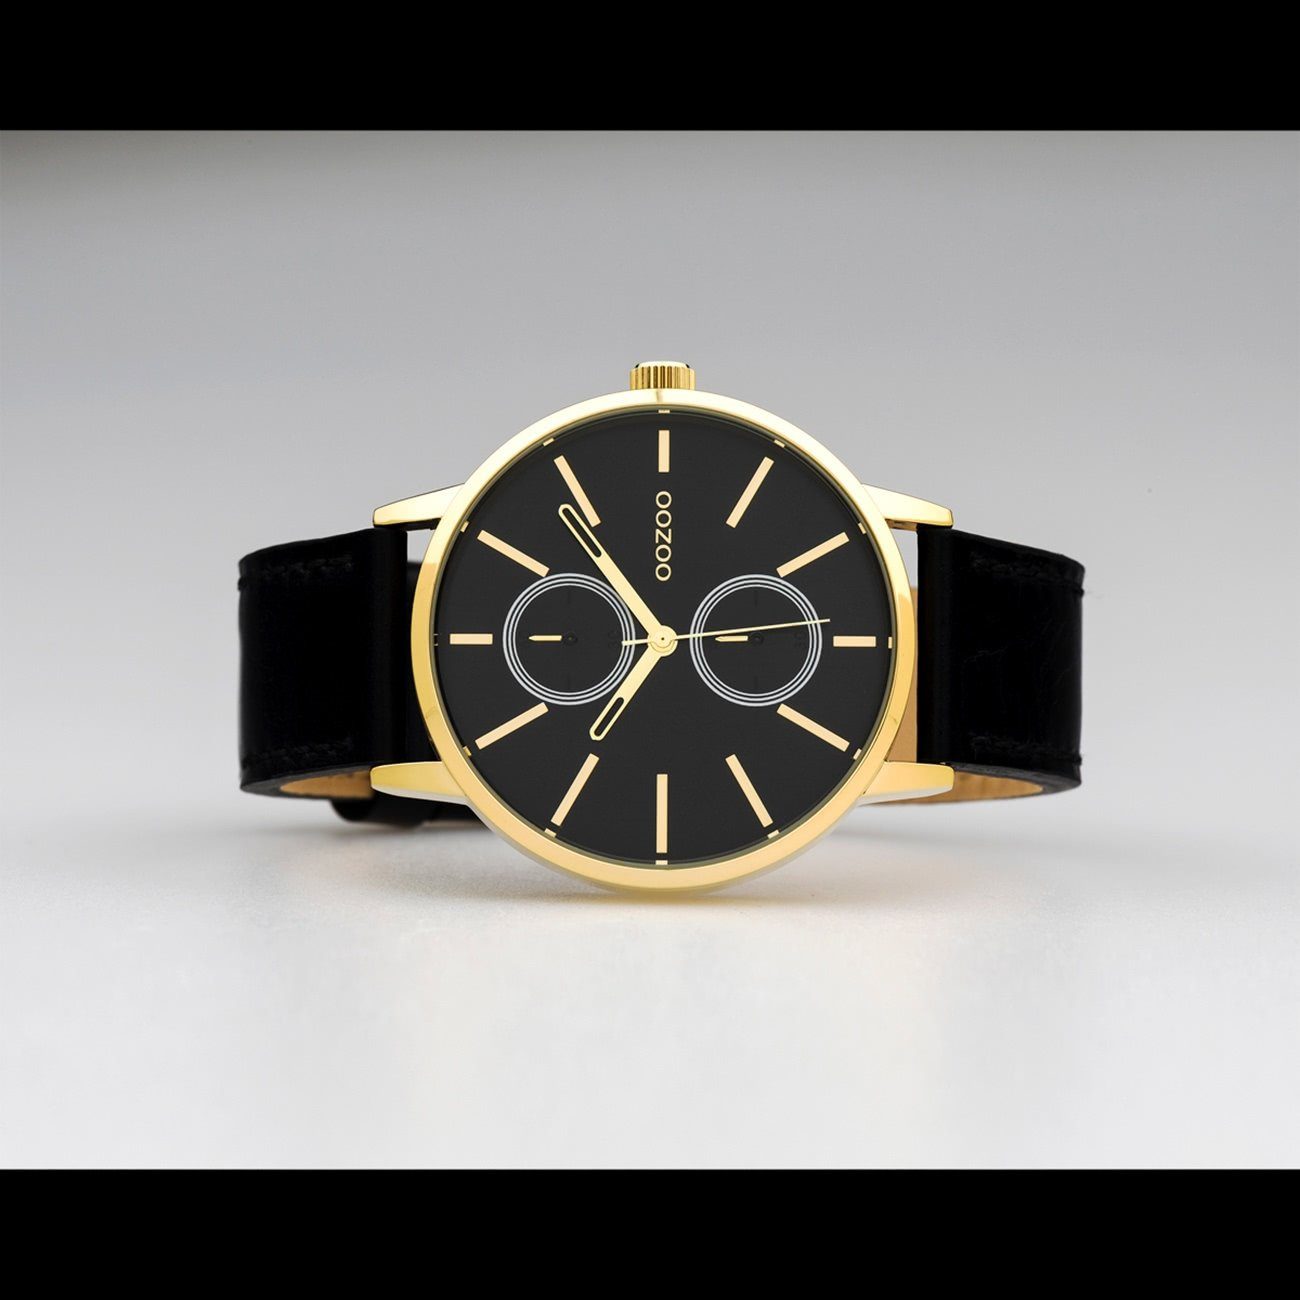 42mm) Oozoo (ca. Herrenuhr rund, Quarzuhr Analog, Lederarmband, Herren Fashion-Style Armbanduhr schwarz groß OOZOO